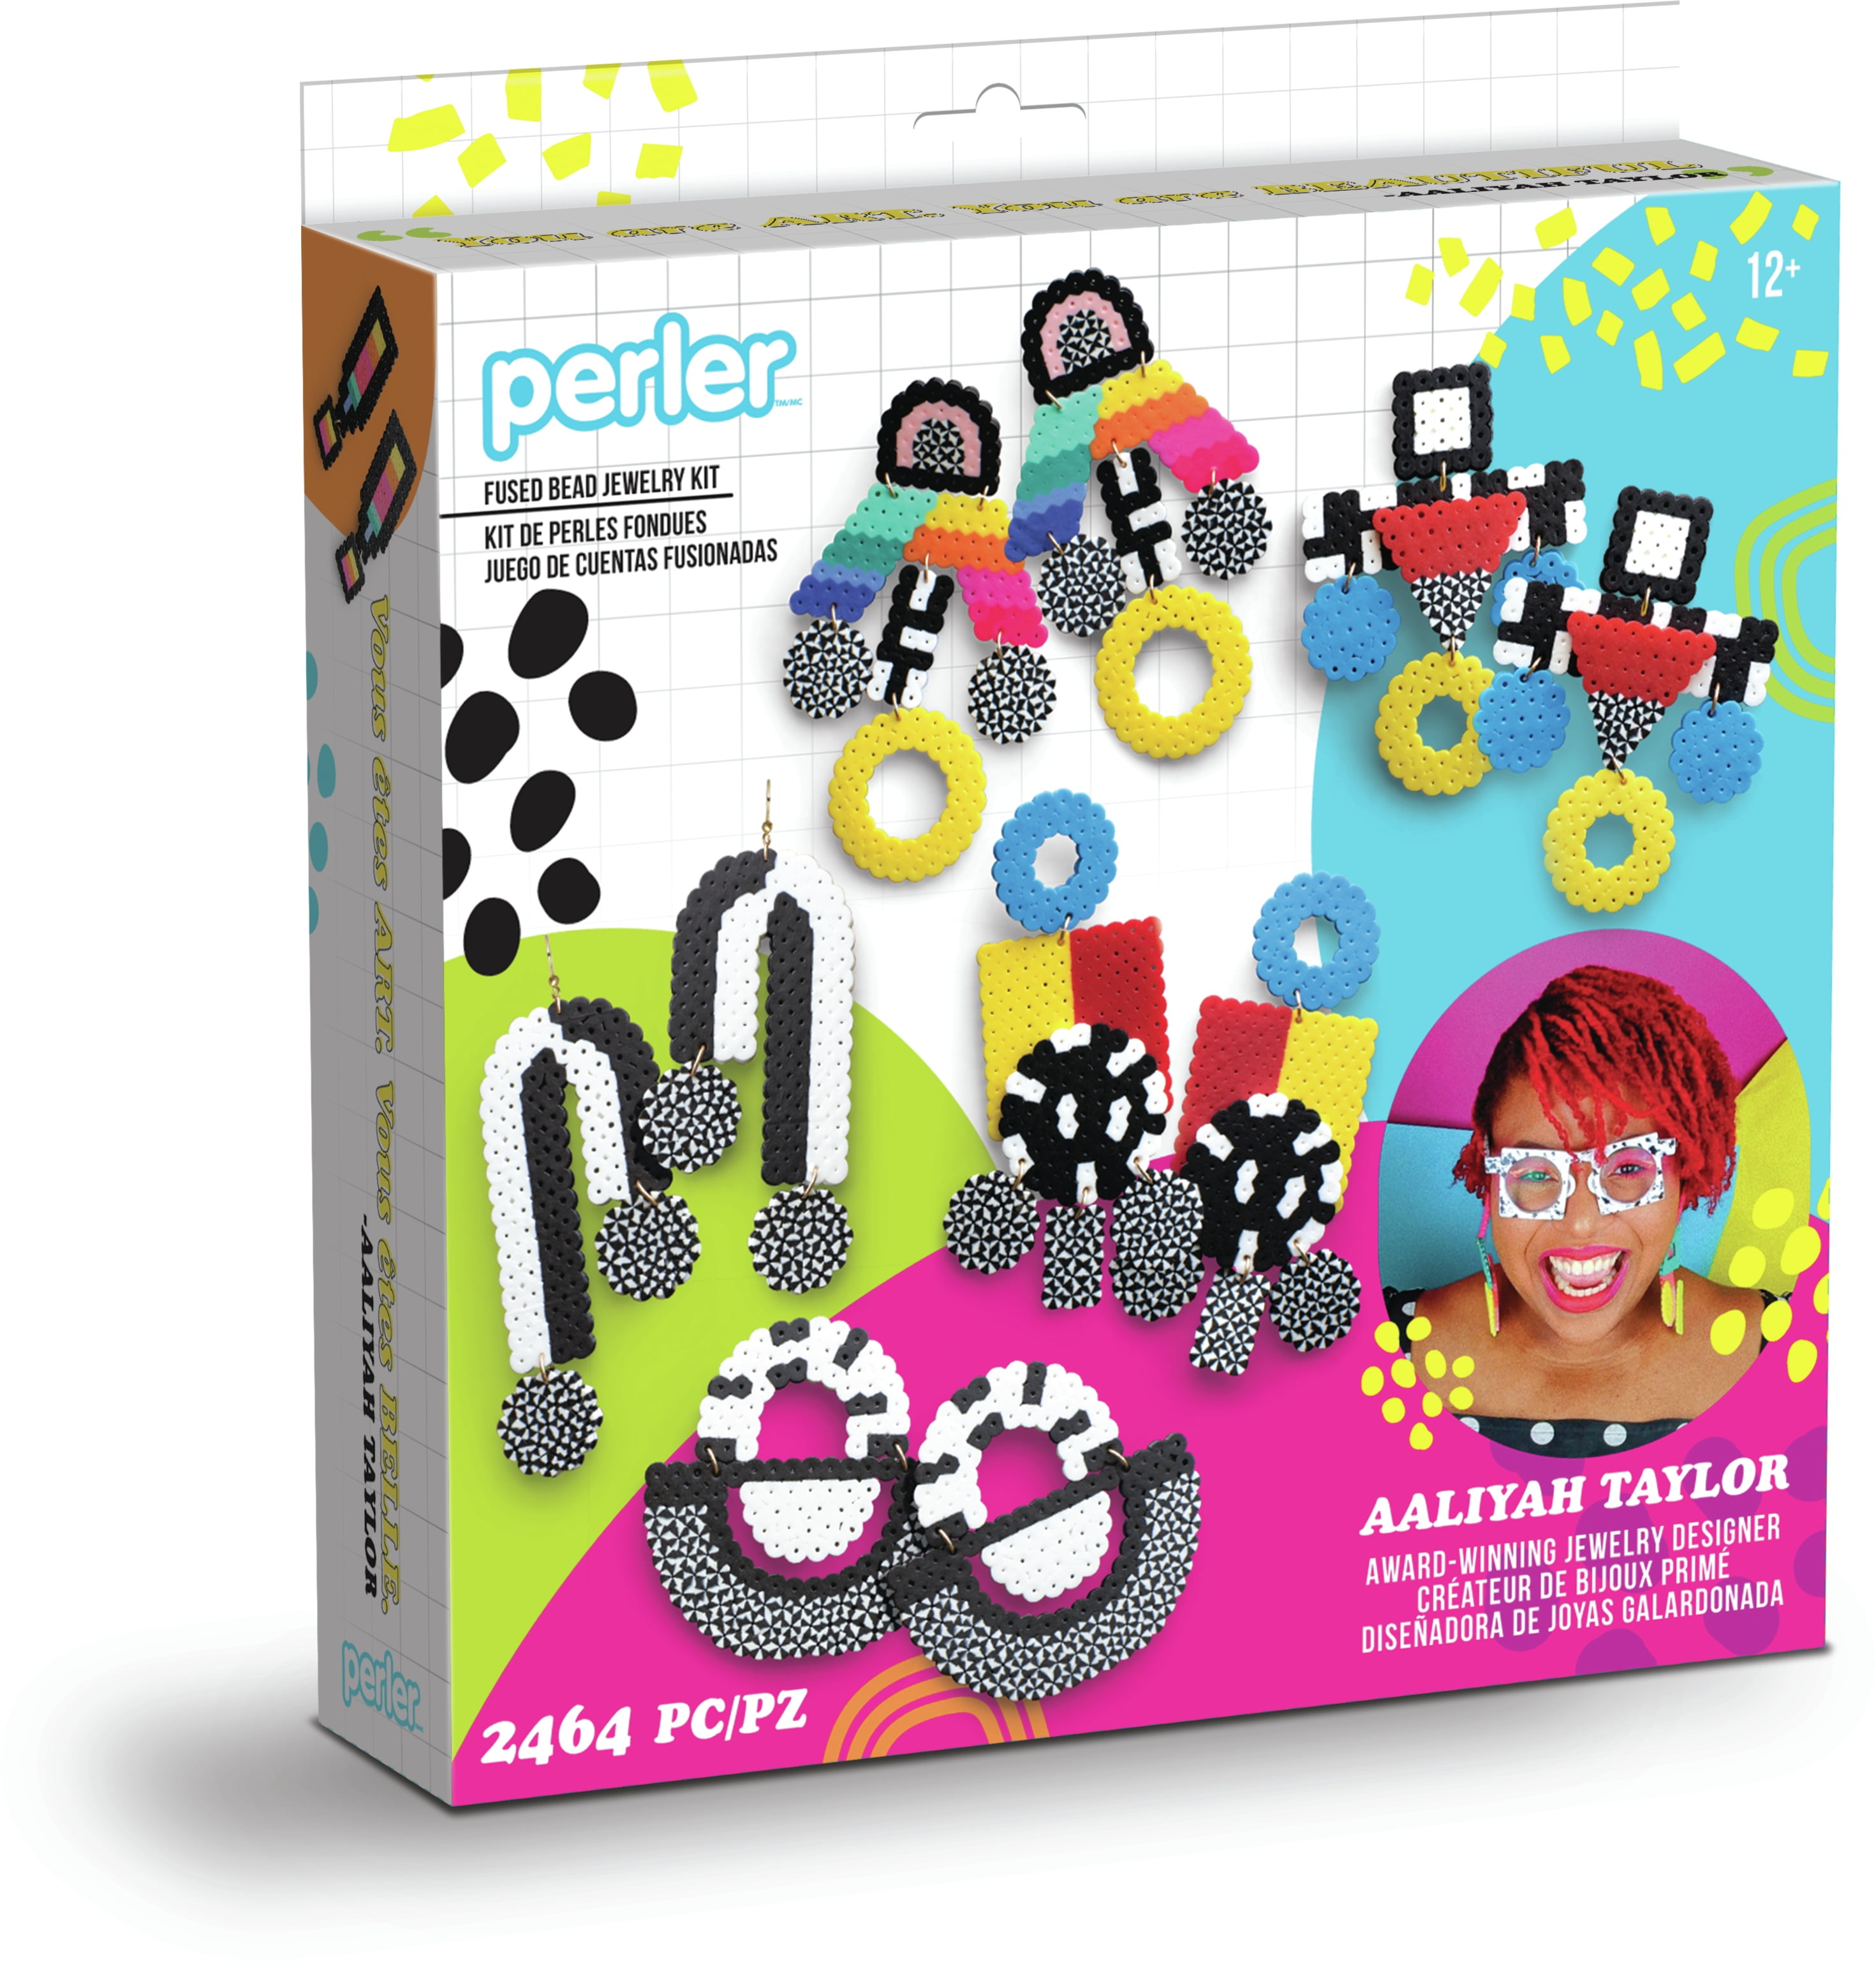 Perler Bead Pegboard Value Pack - Grandrabbit's Toys in Boulder, Colorado